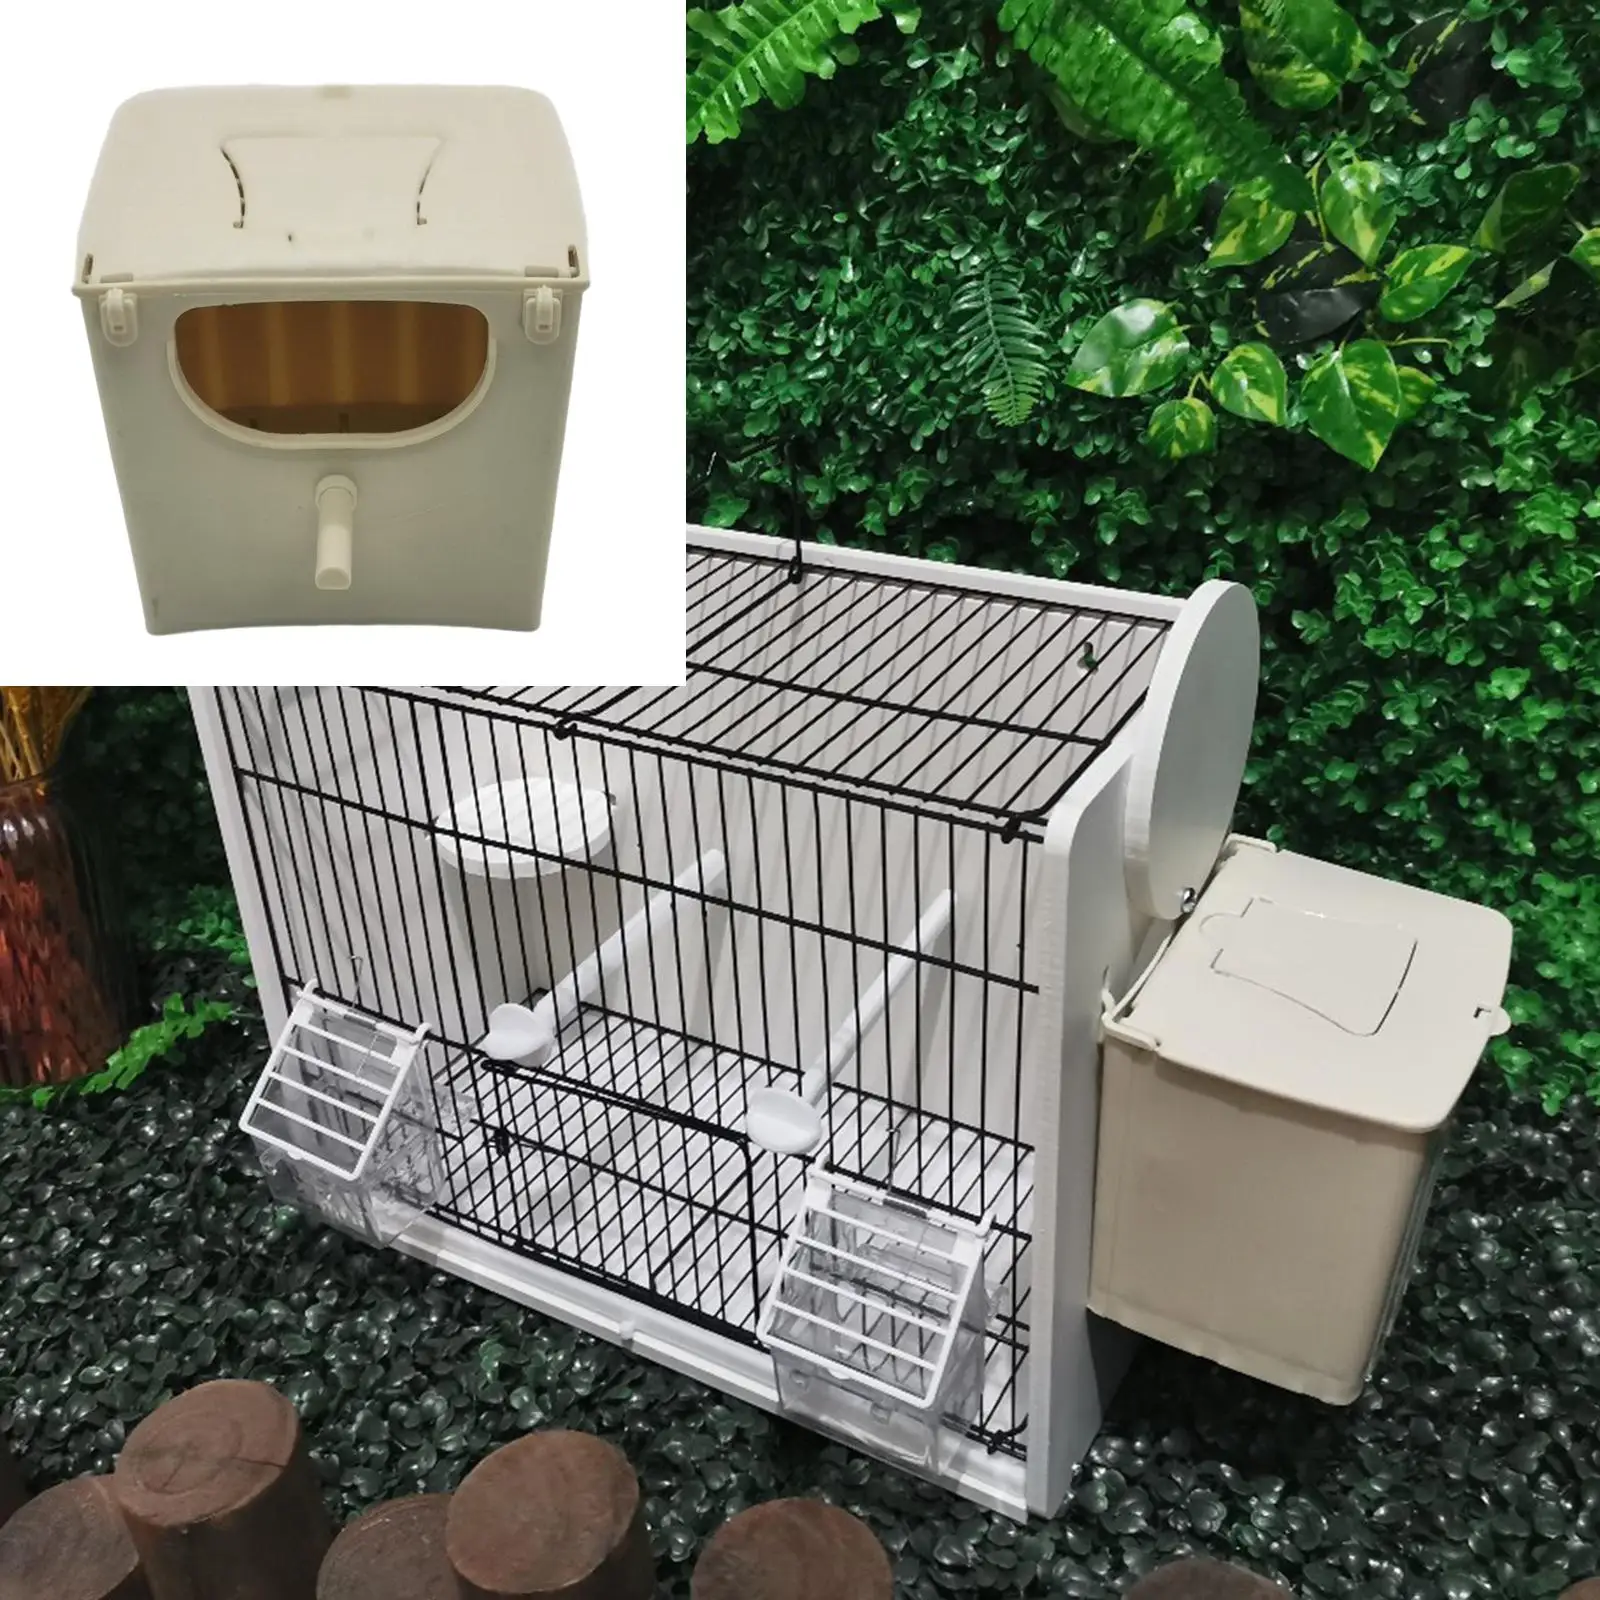 Bird Hut Box Breathable Bird Cage for Budgerigars Cockatiel Parakeet